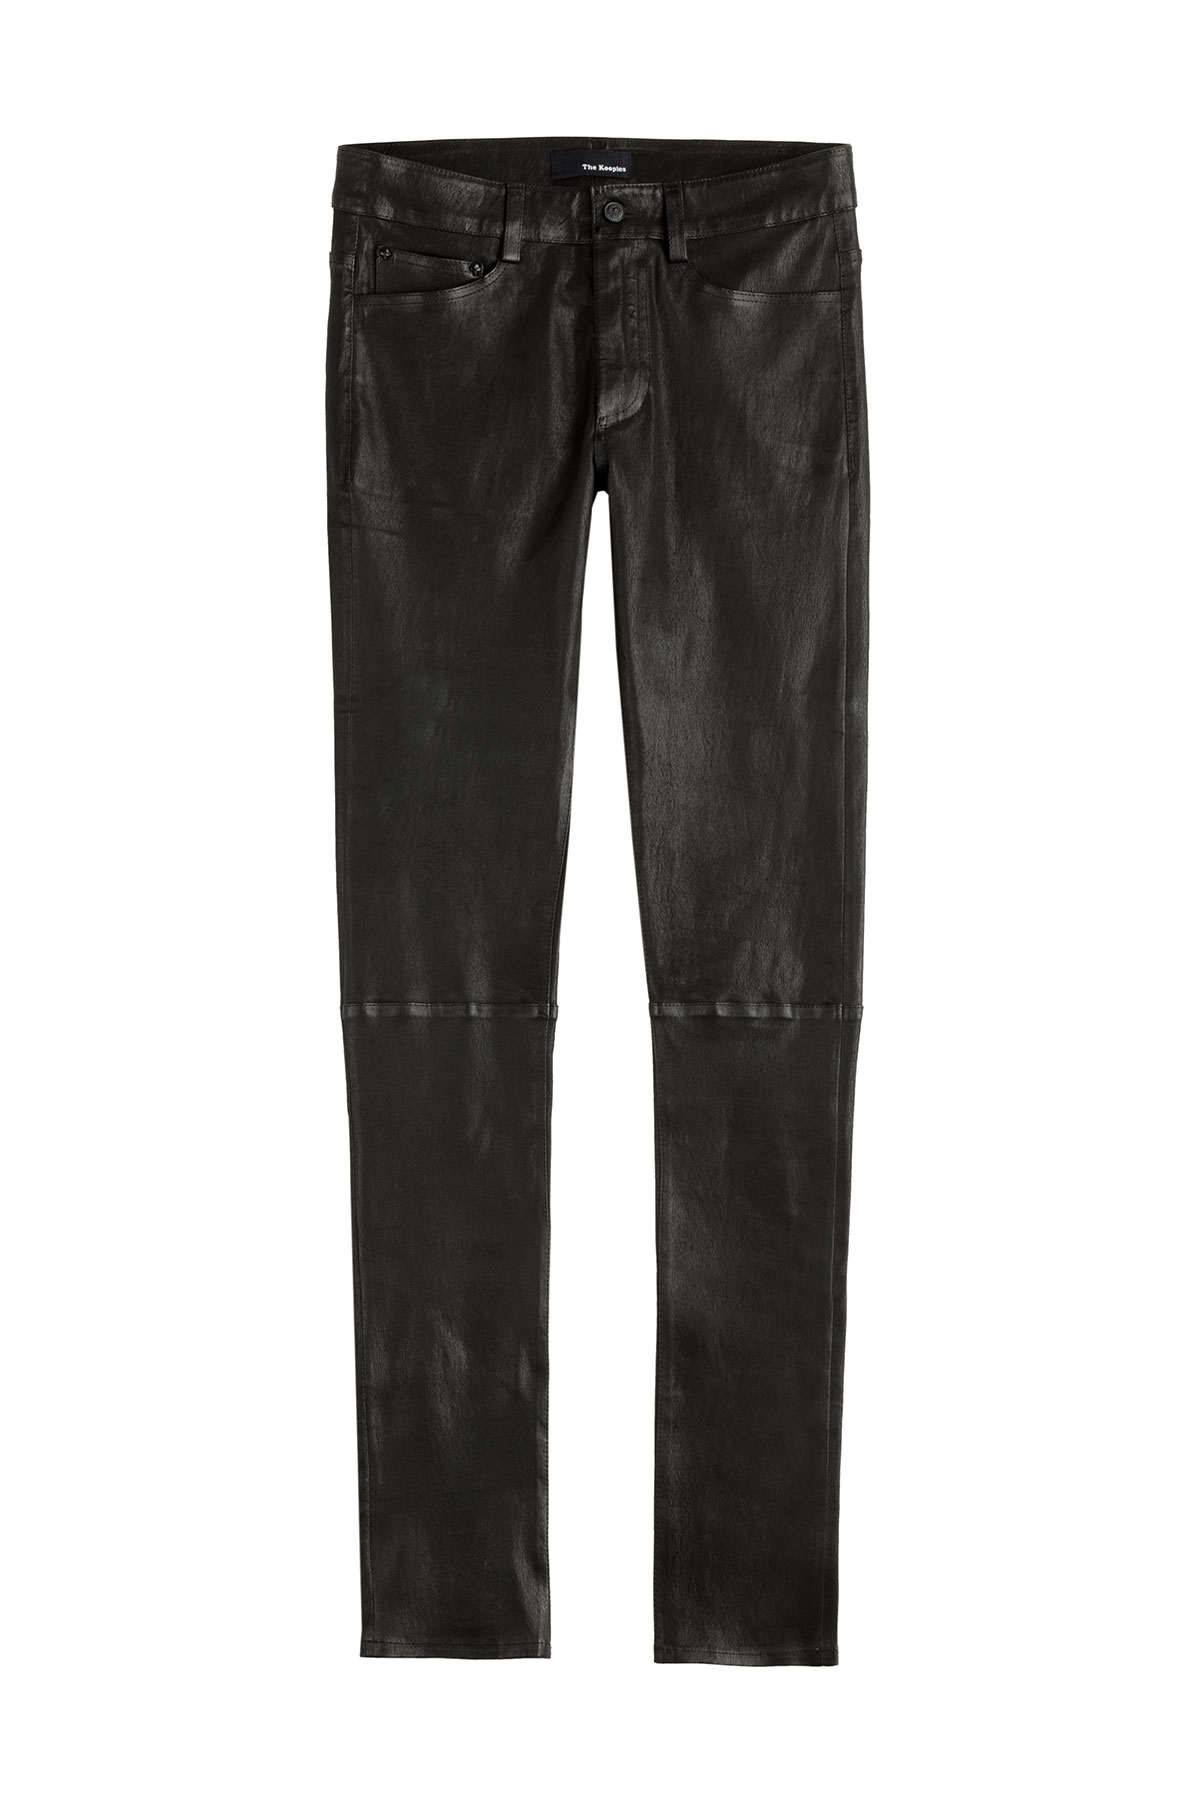 Lyst - The Kooples Leather Pants - Black in Black for Men